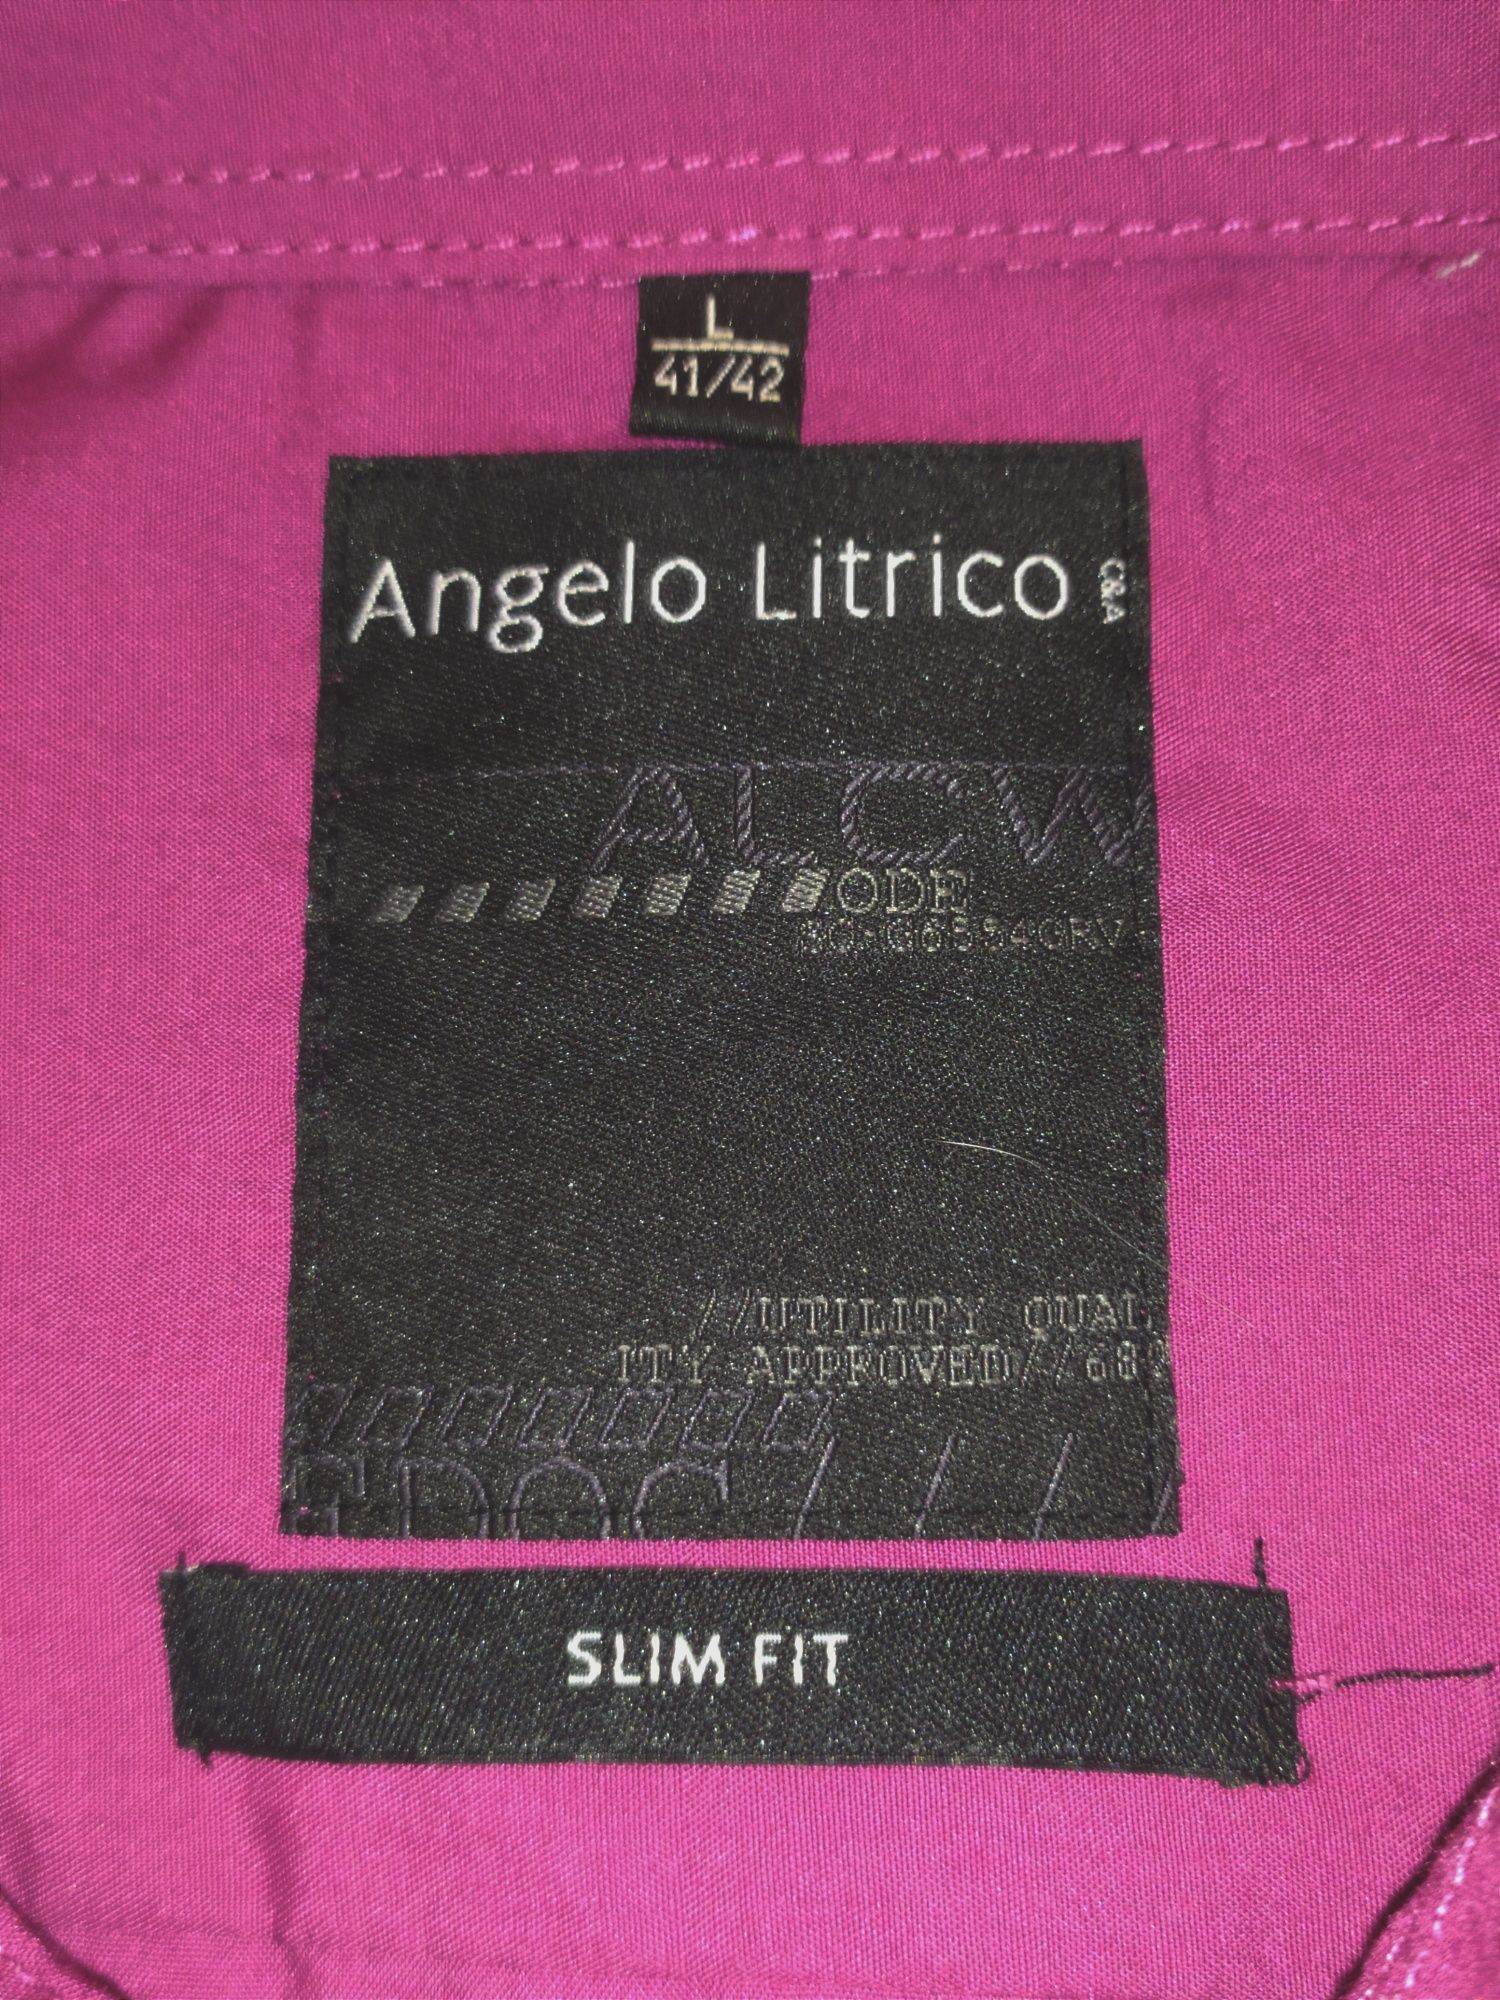 Мужская рубашка Angelo Litrico р.48-50, шведка, легкая